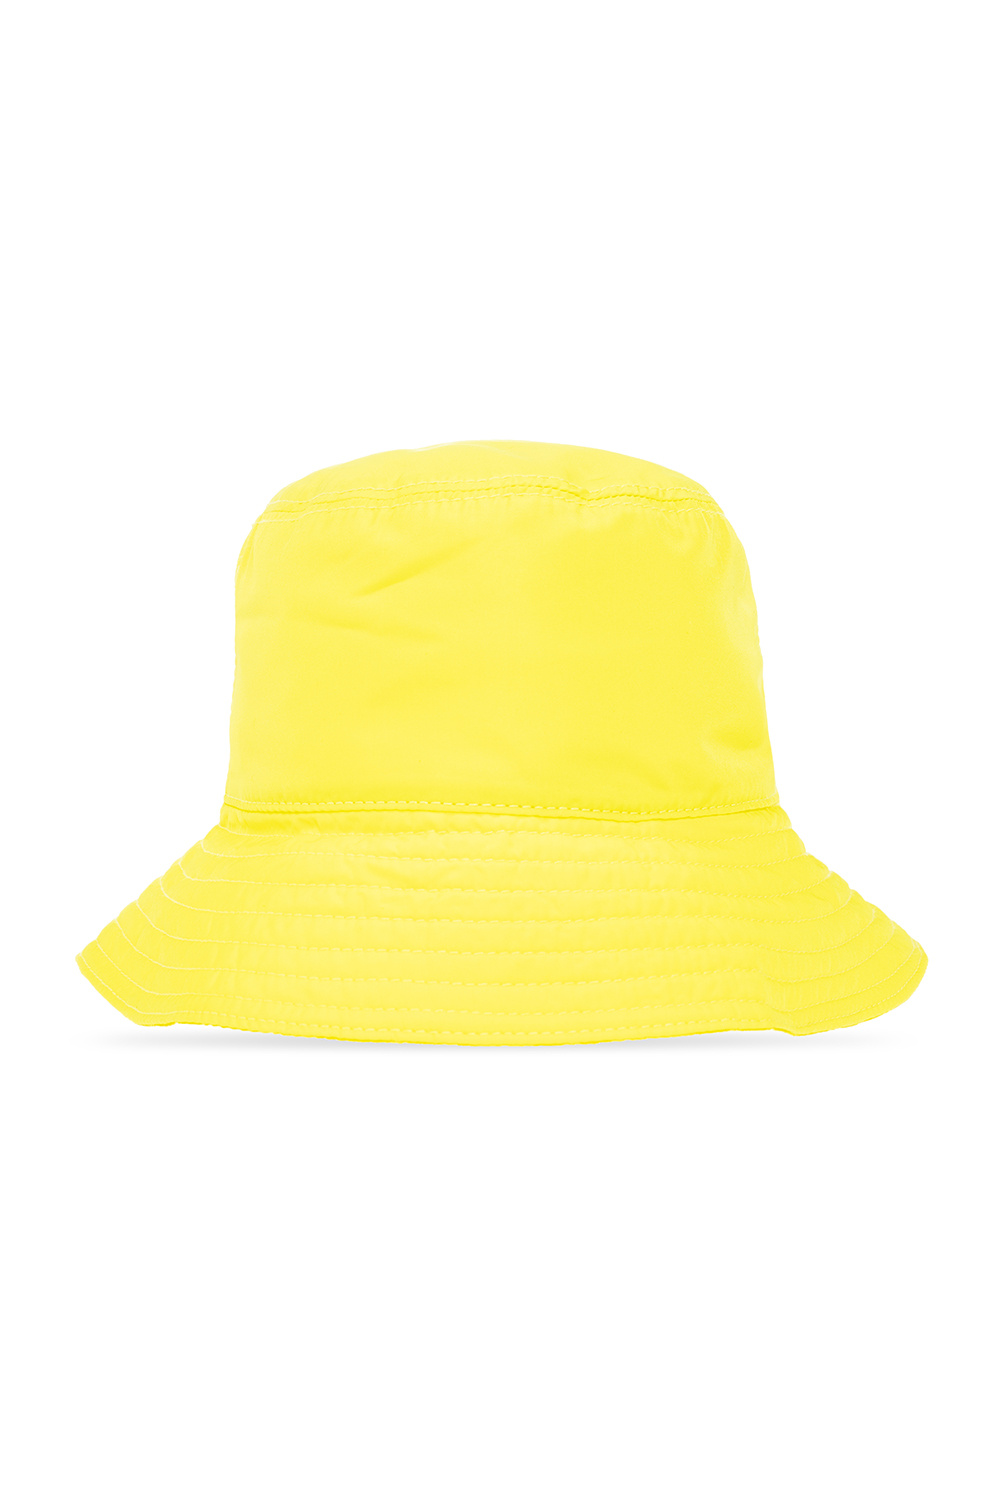 Fendi Kids Reversible bucket 9-5 hat with logo